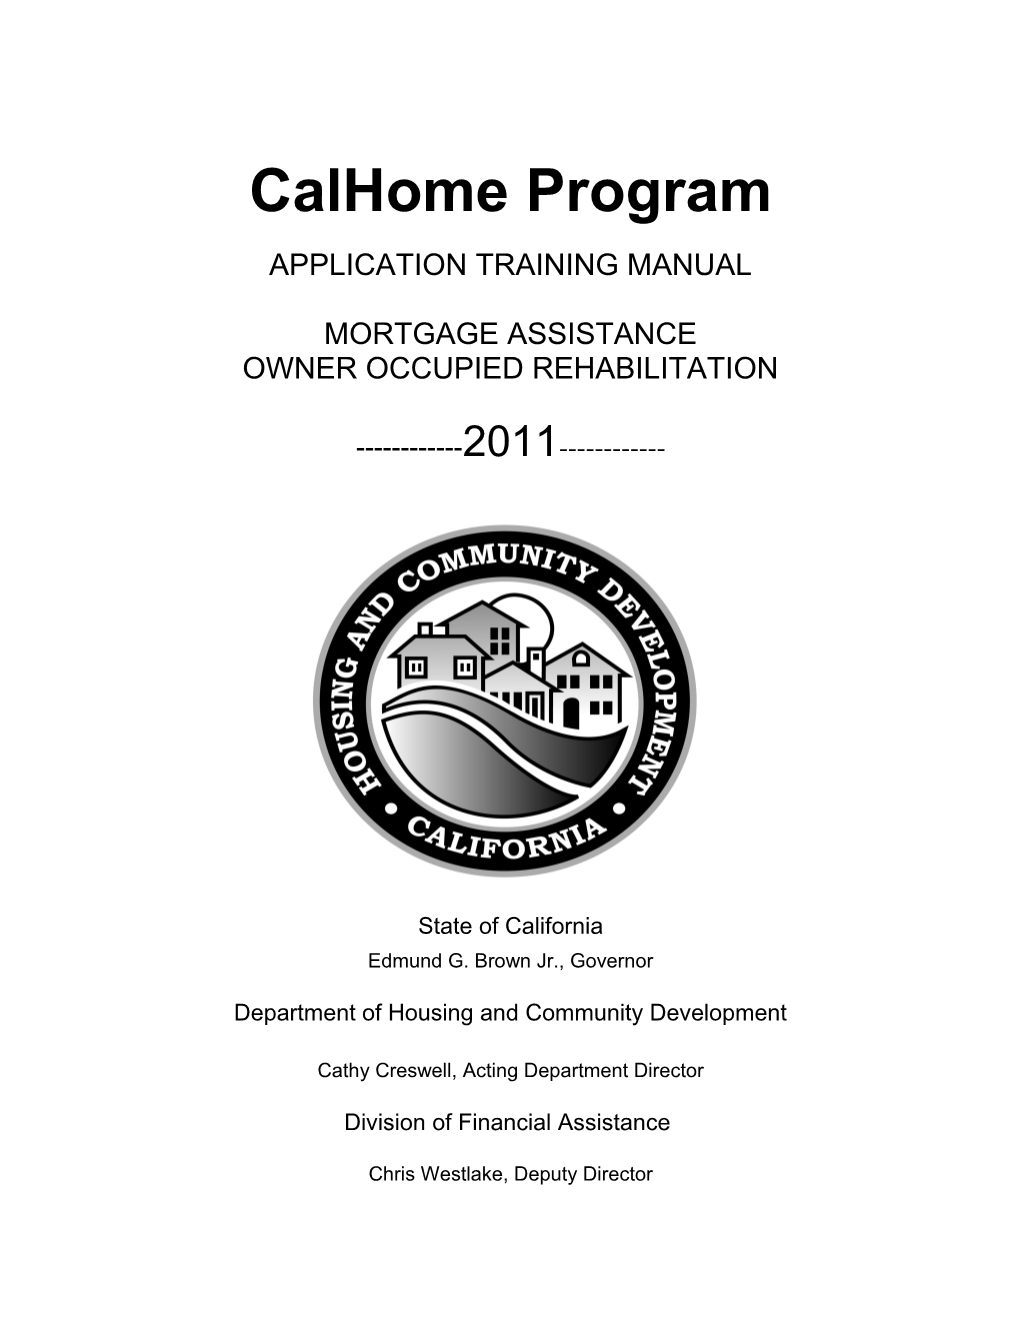 Calhome Application Training Manual